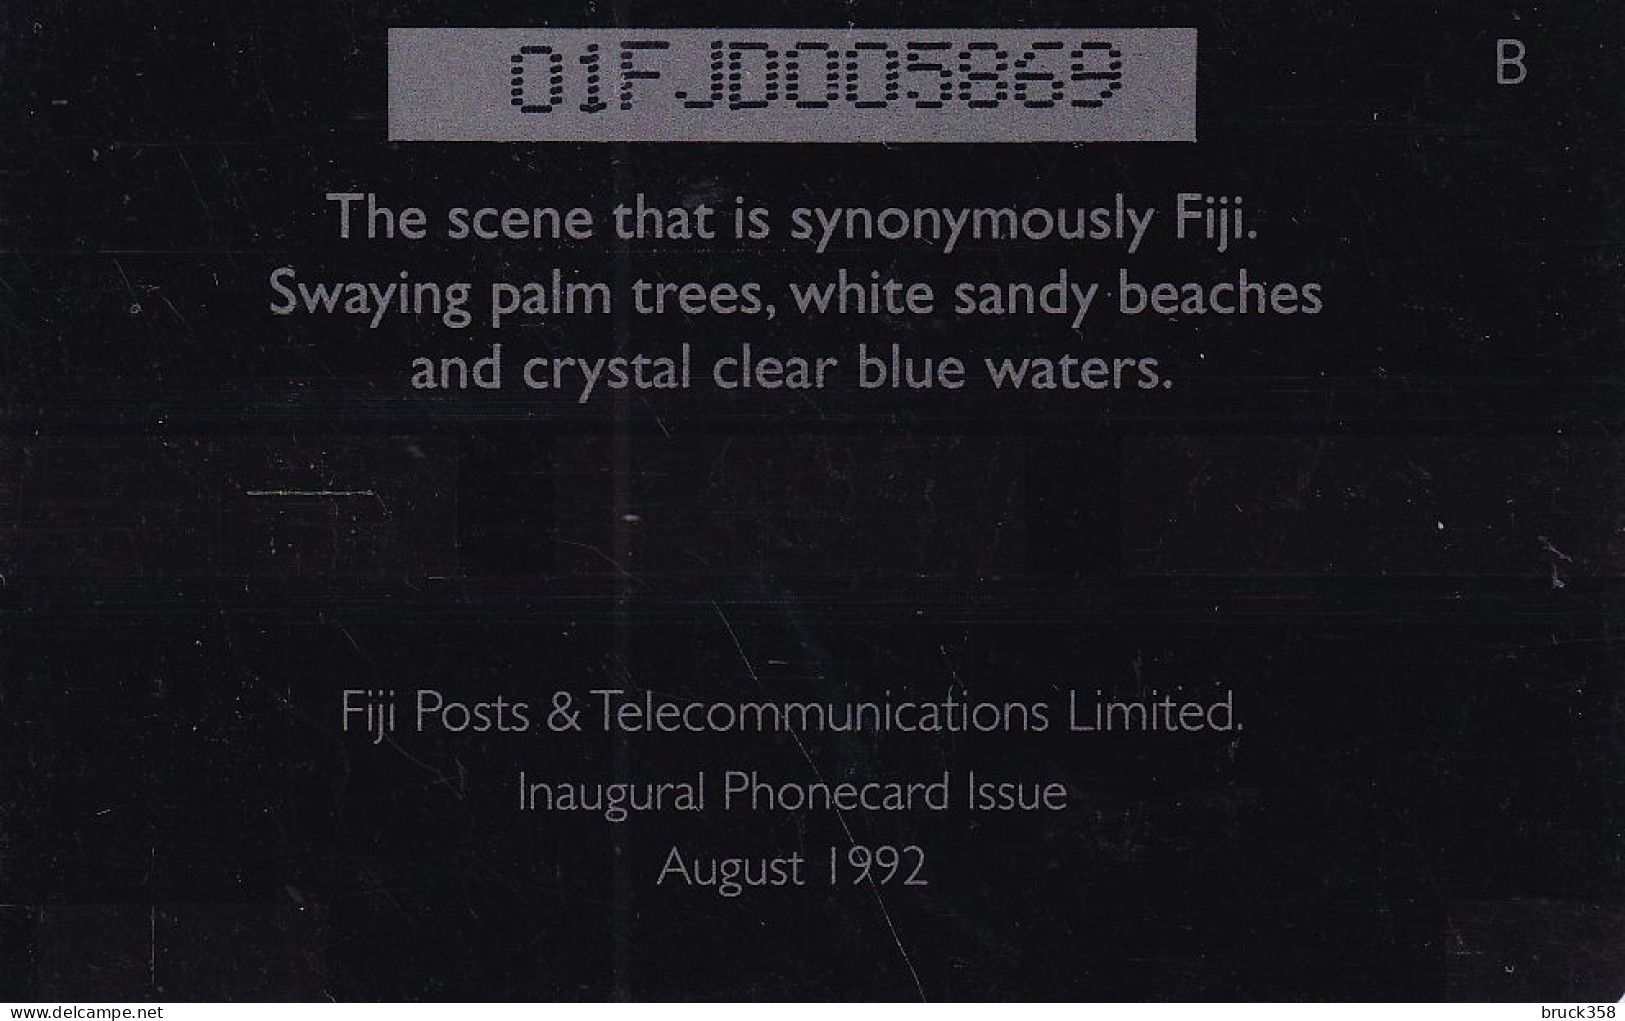 FIDSCHI - Fidschi